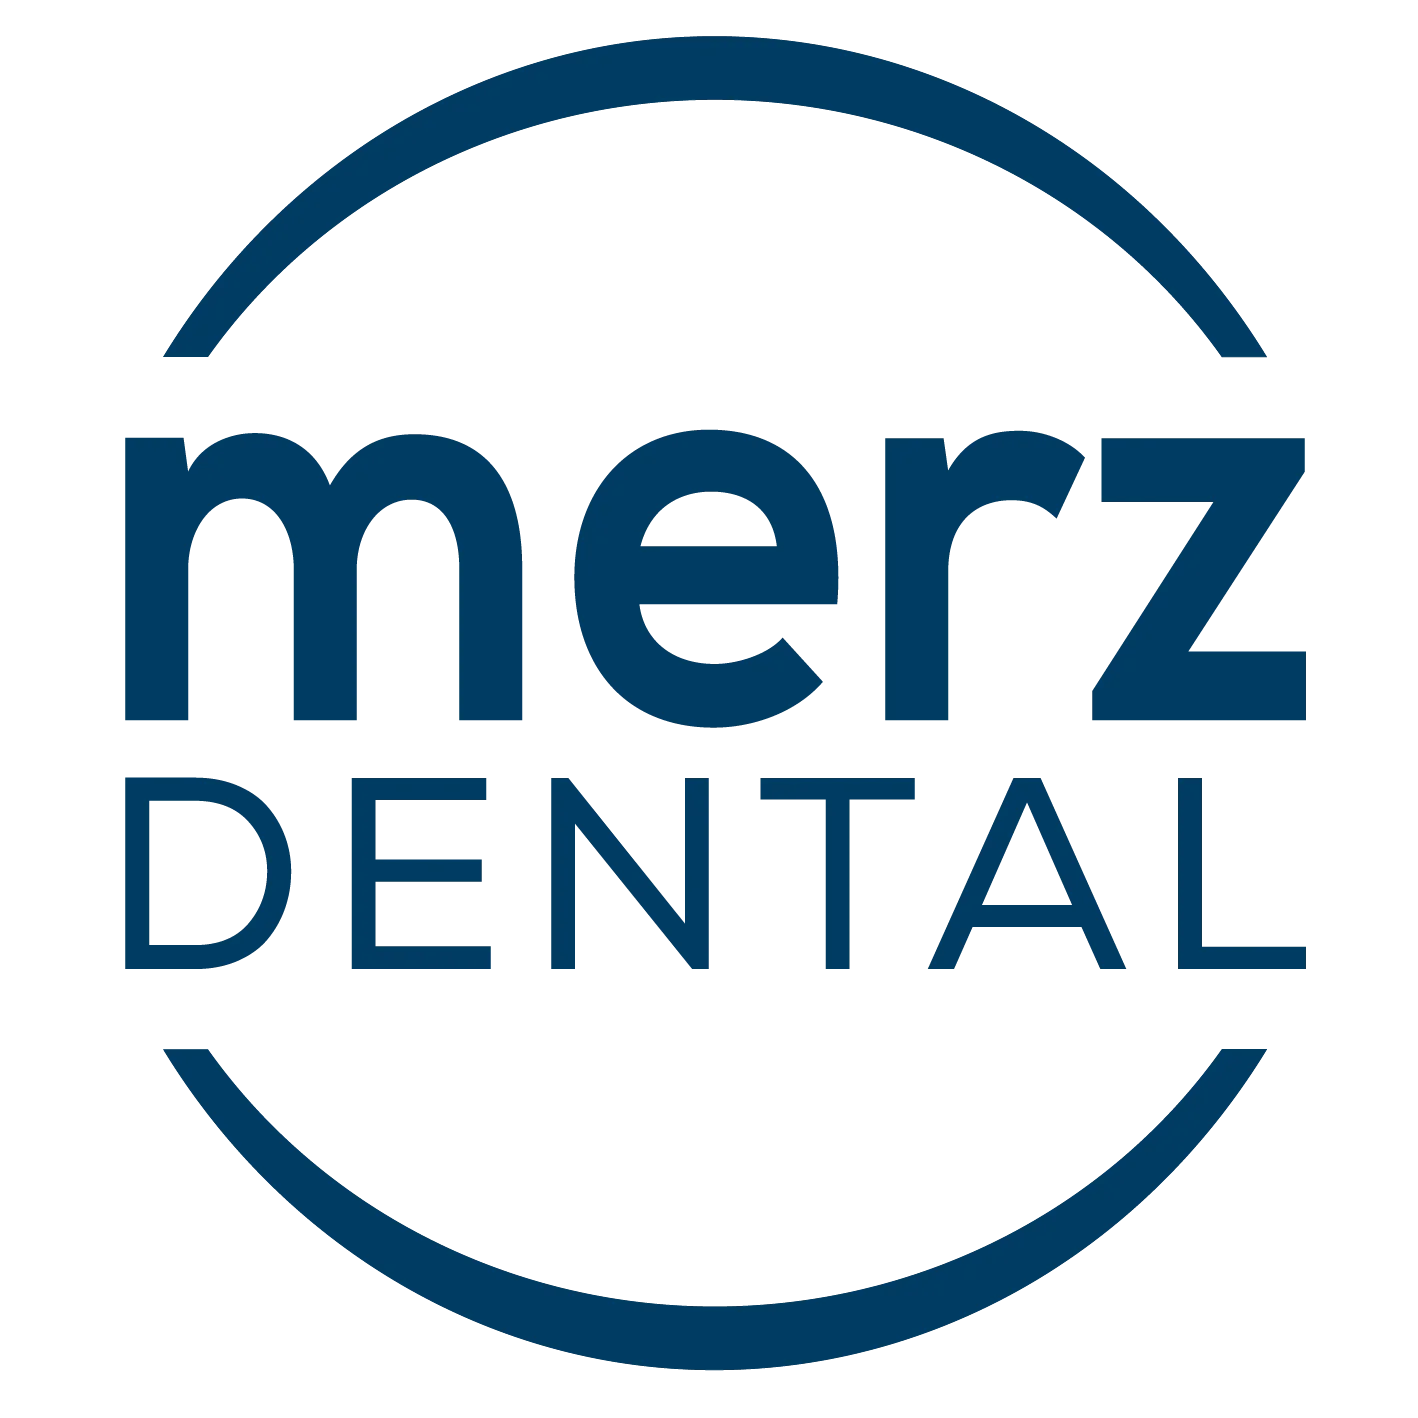 Merz Dental GmbH